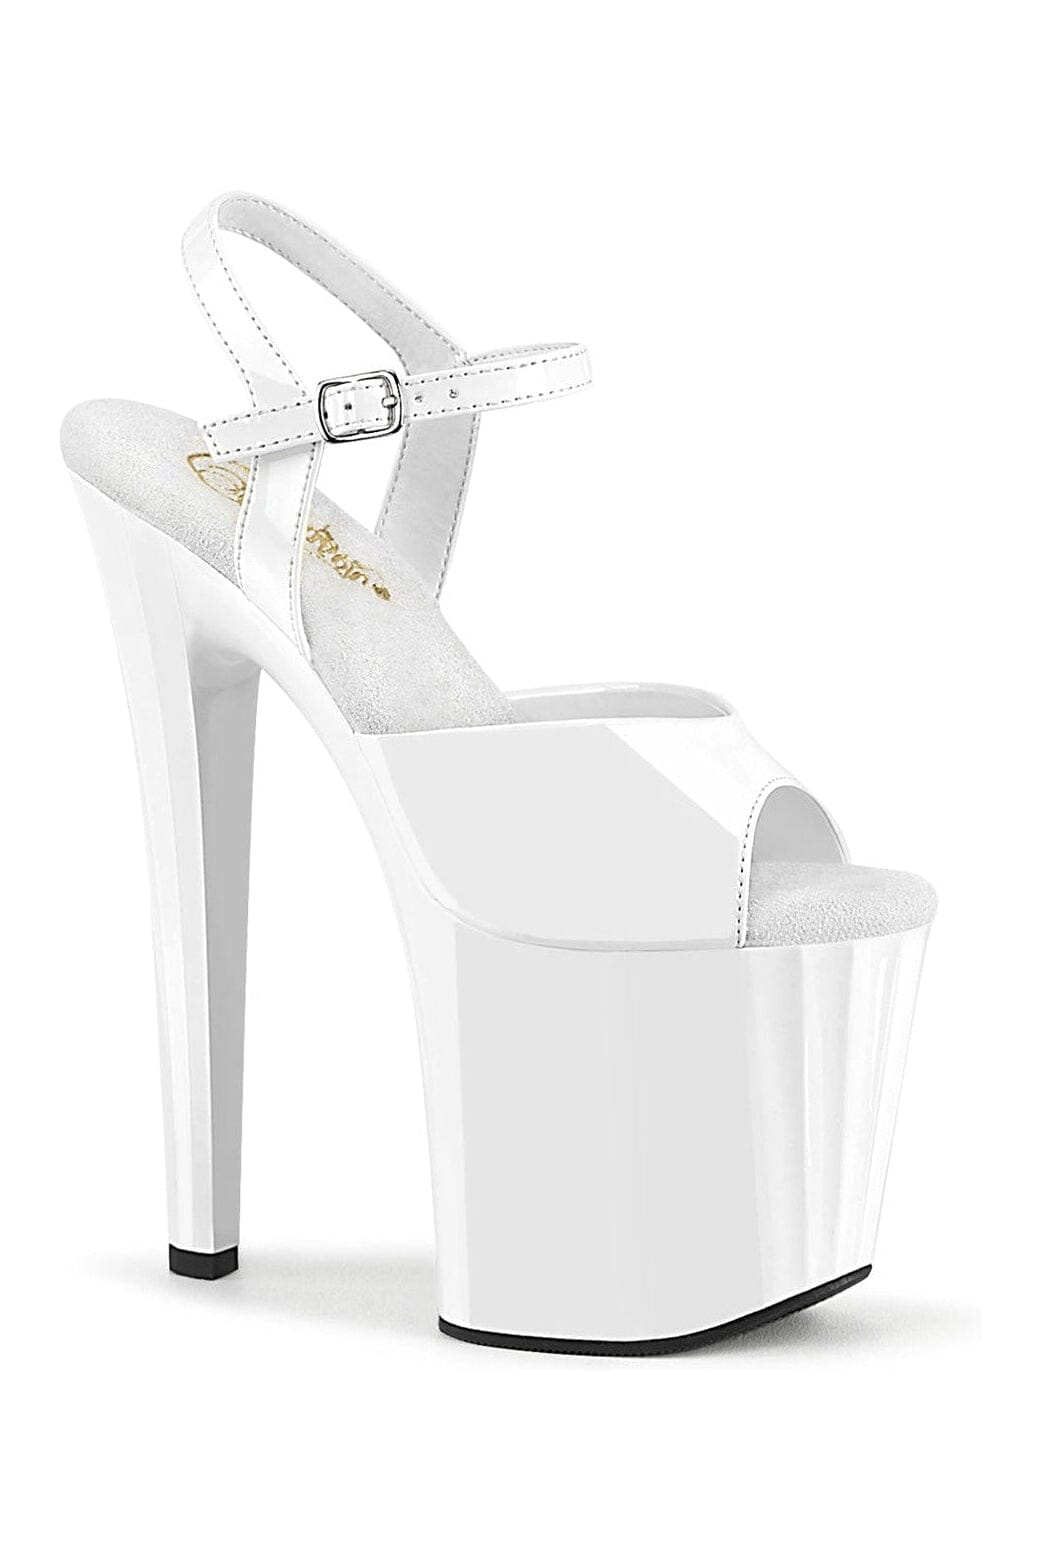 Pleaser White Sandals Platform Stripper Shoes | Buy at Sexyshoes.com